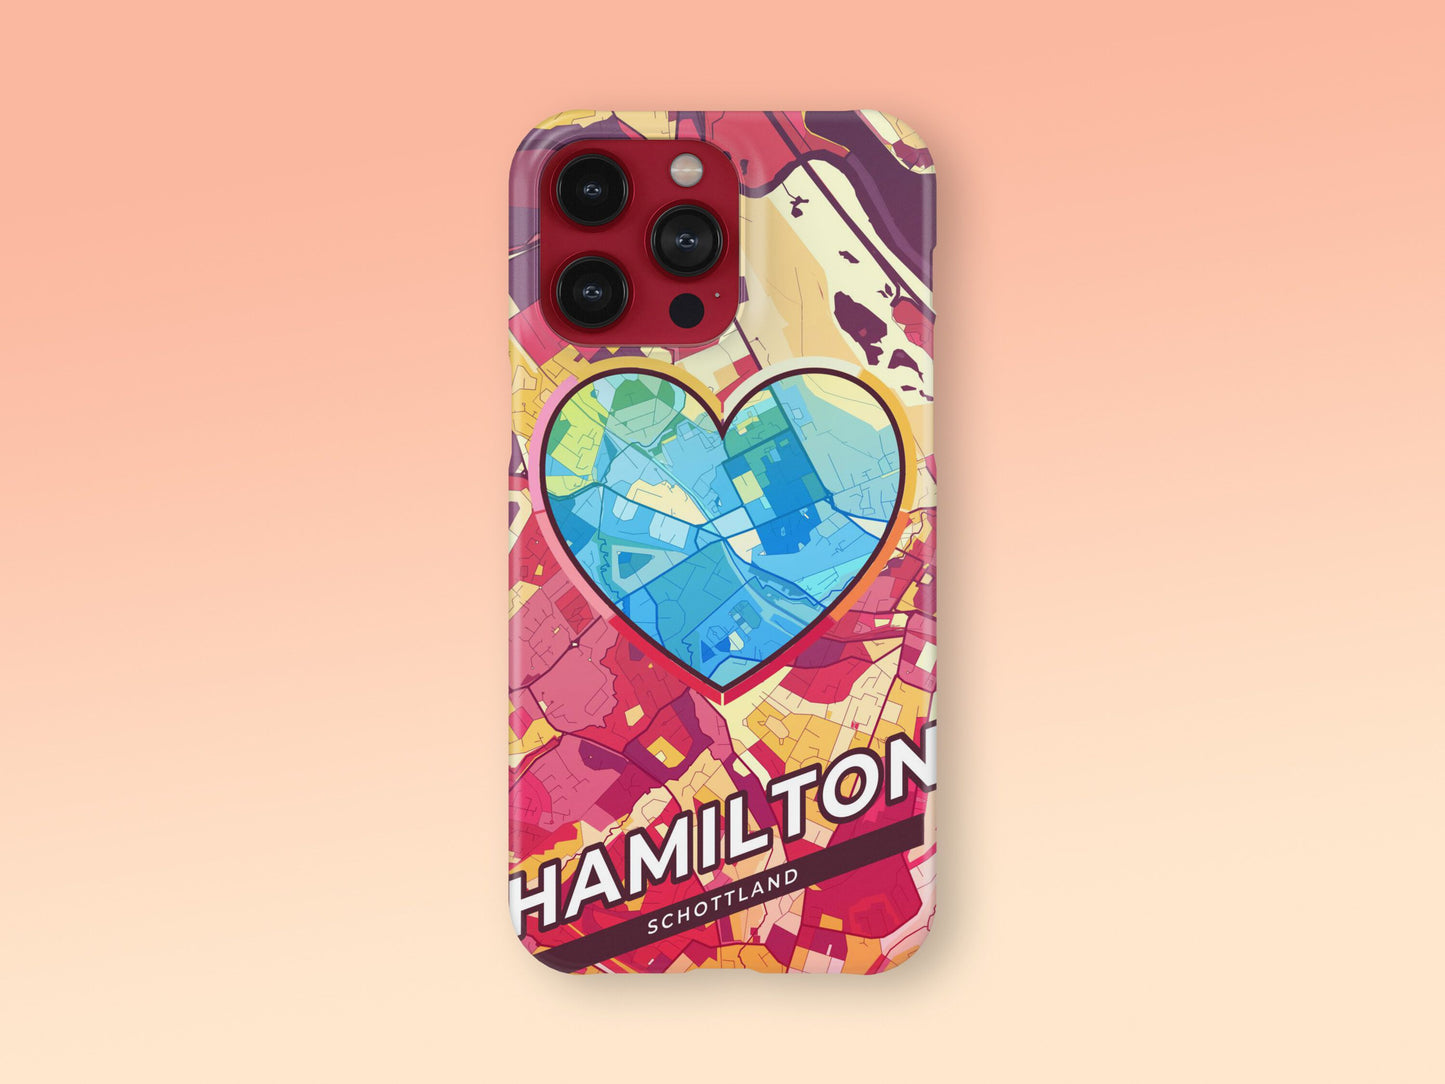 Hamilton Scotland slim phone case with colorful icon. Birthday, wedding or housewarming gift. Couple match cases. 2